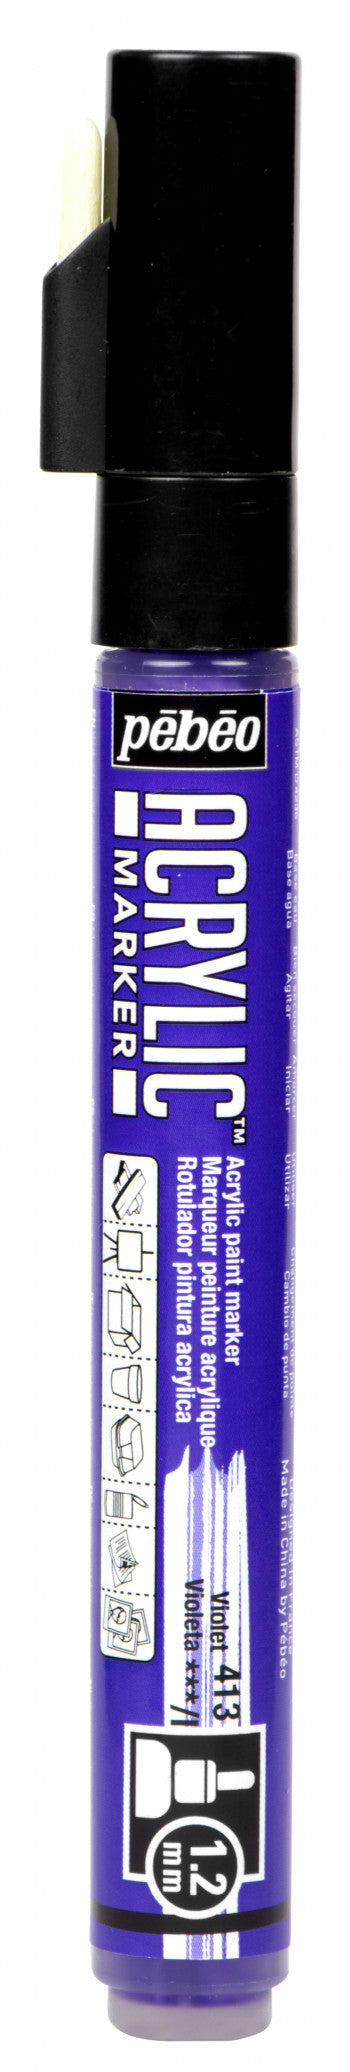 Acrylic Marker 1.2mm Pebeo      Violet - 413